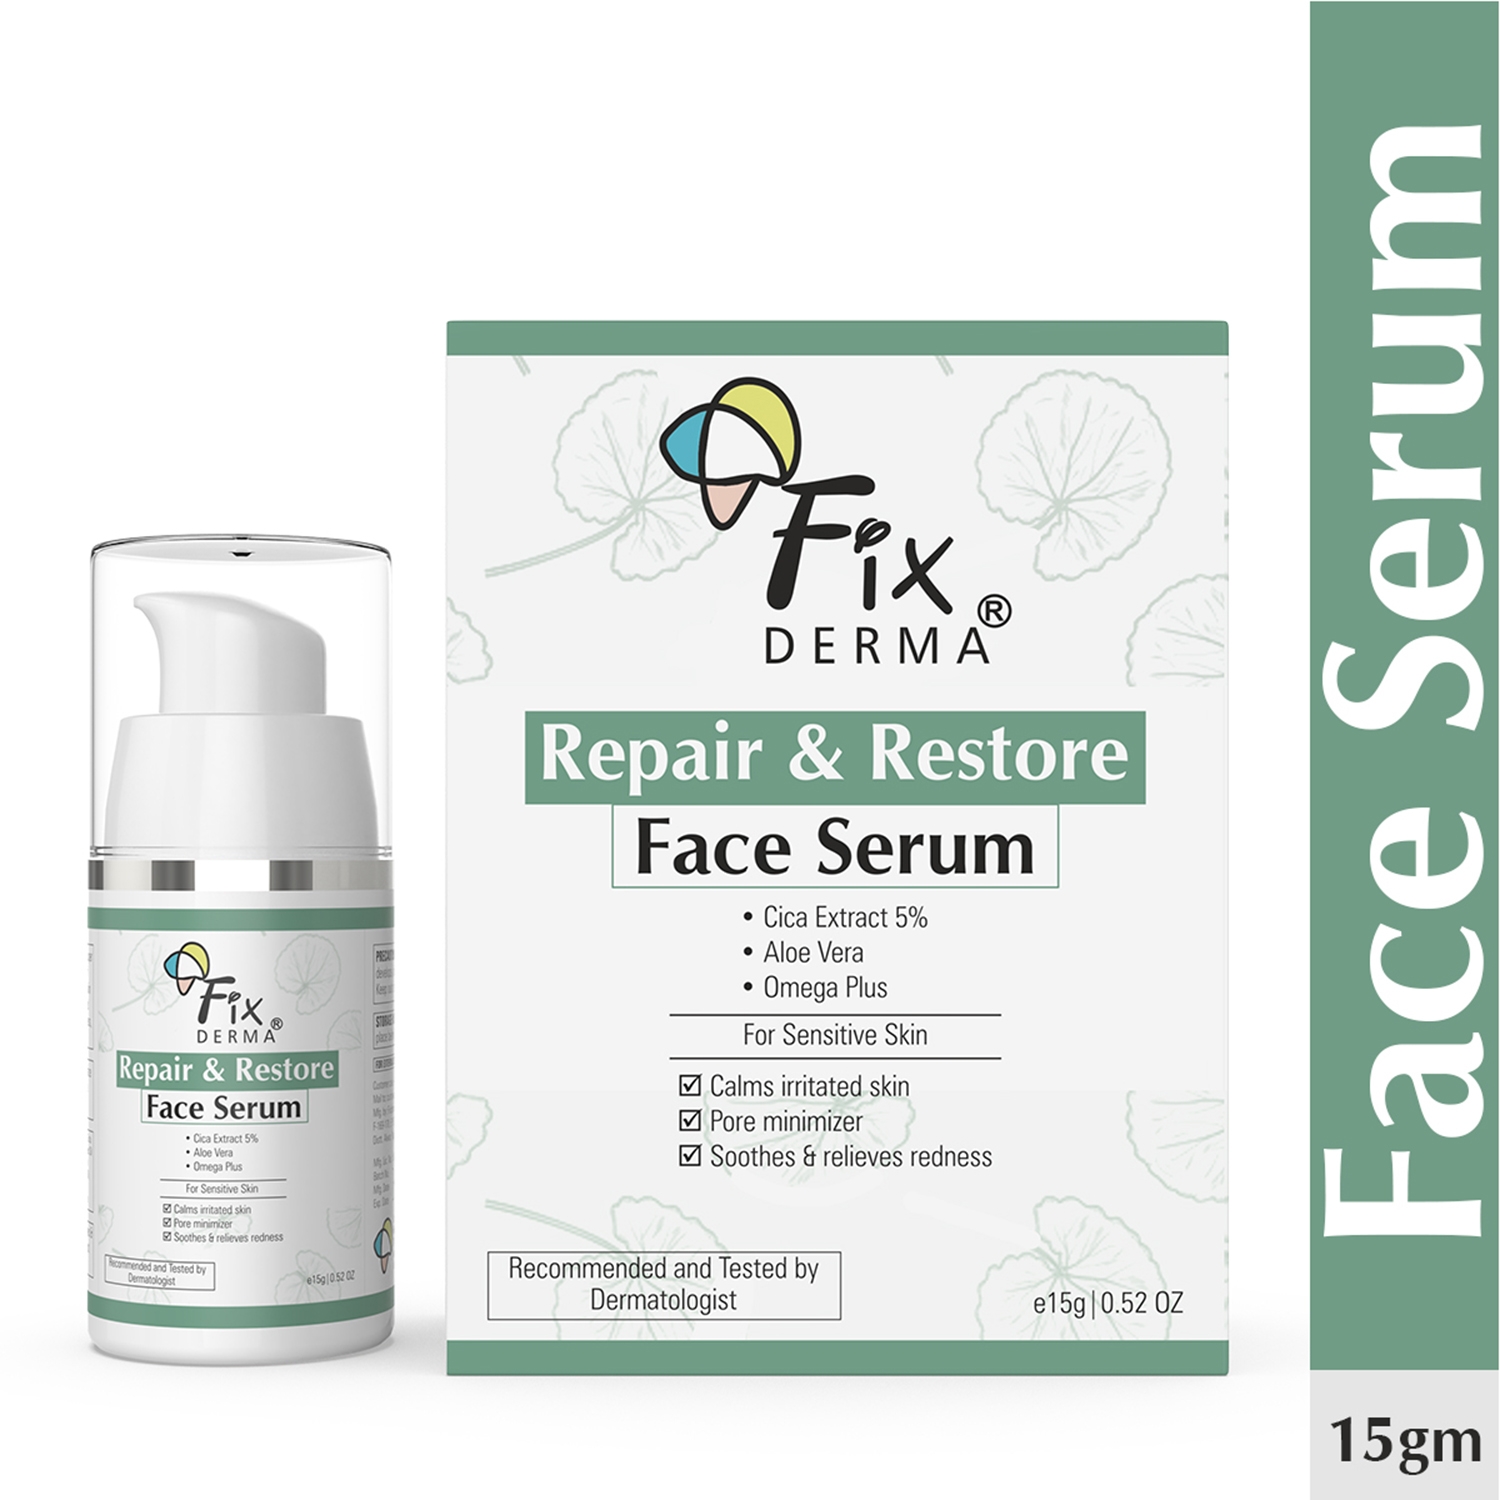 Fixderma | Fixderma 5% Cica Extract & Aloevera Face Serum Repair & Restore Glow Face Serum (15g)